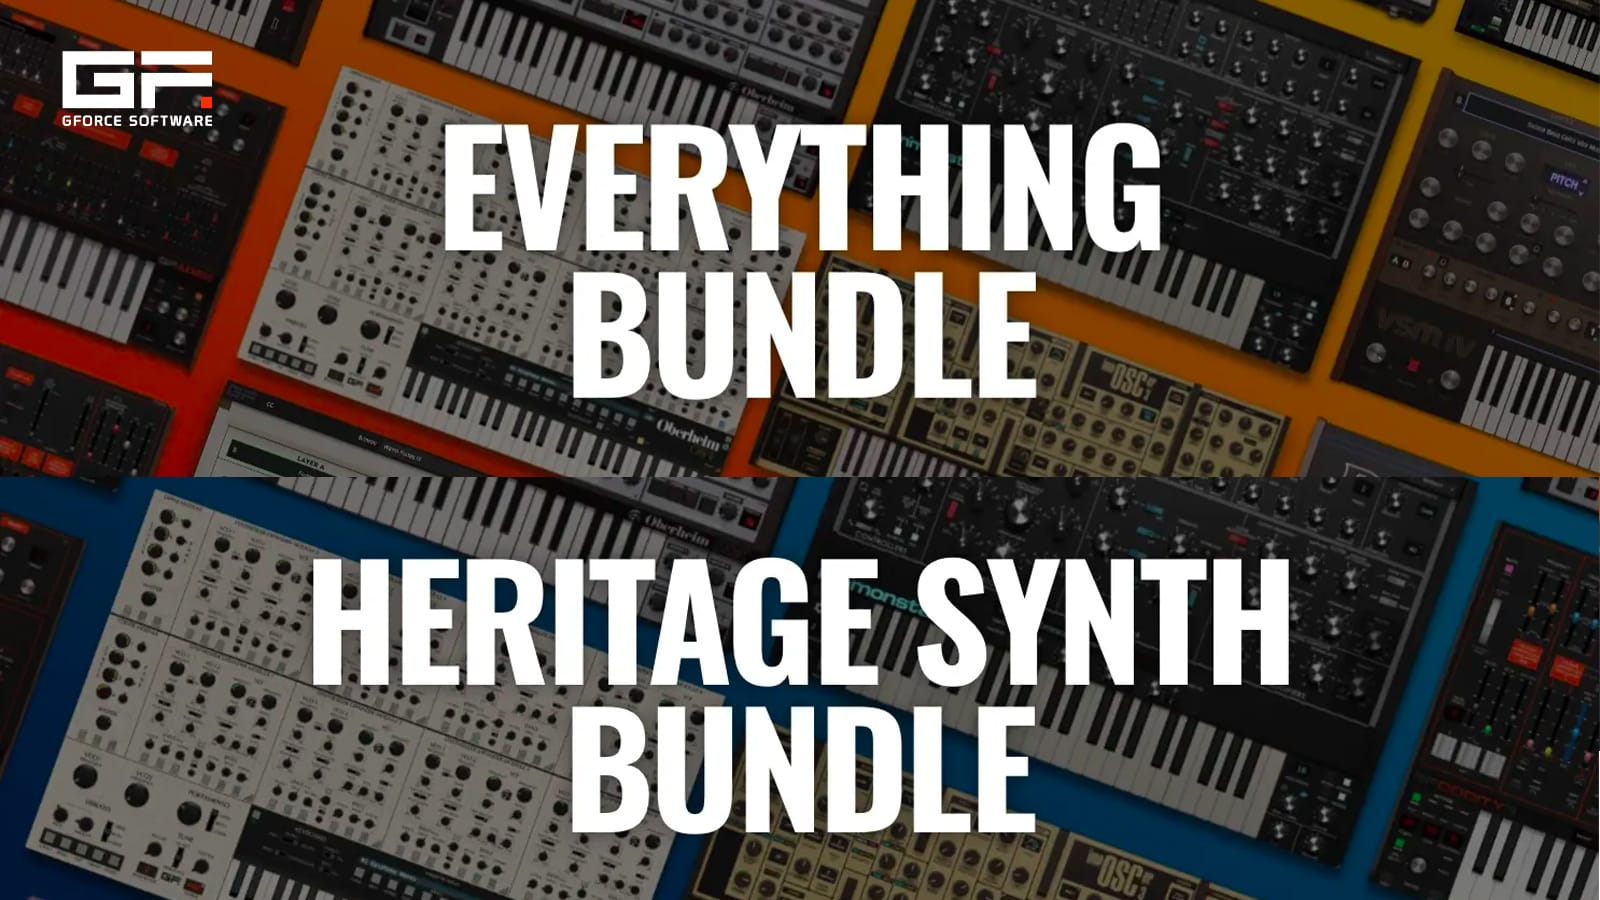 GForce Software、アナログシンセ音源バンドル「Heritage Synth Bundle」と全タイトルバンドル「Everything Bundle」を発売